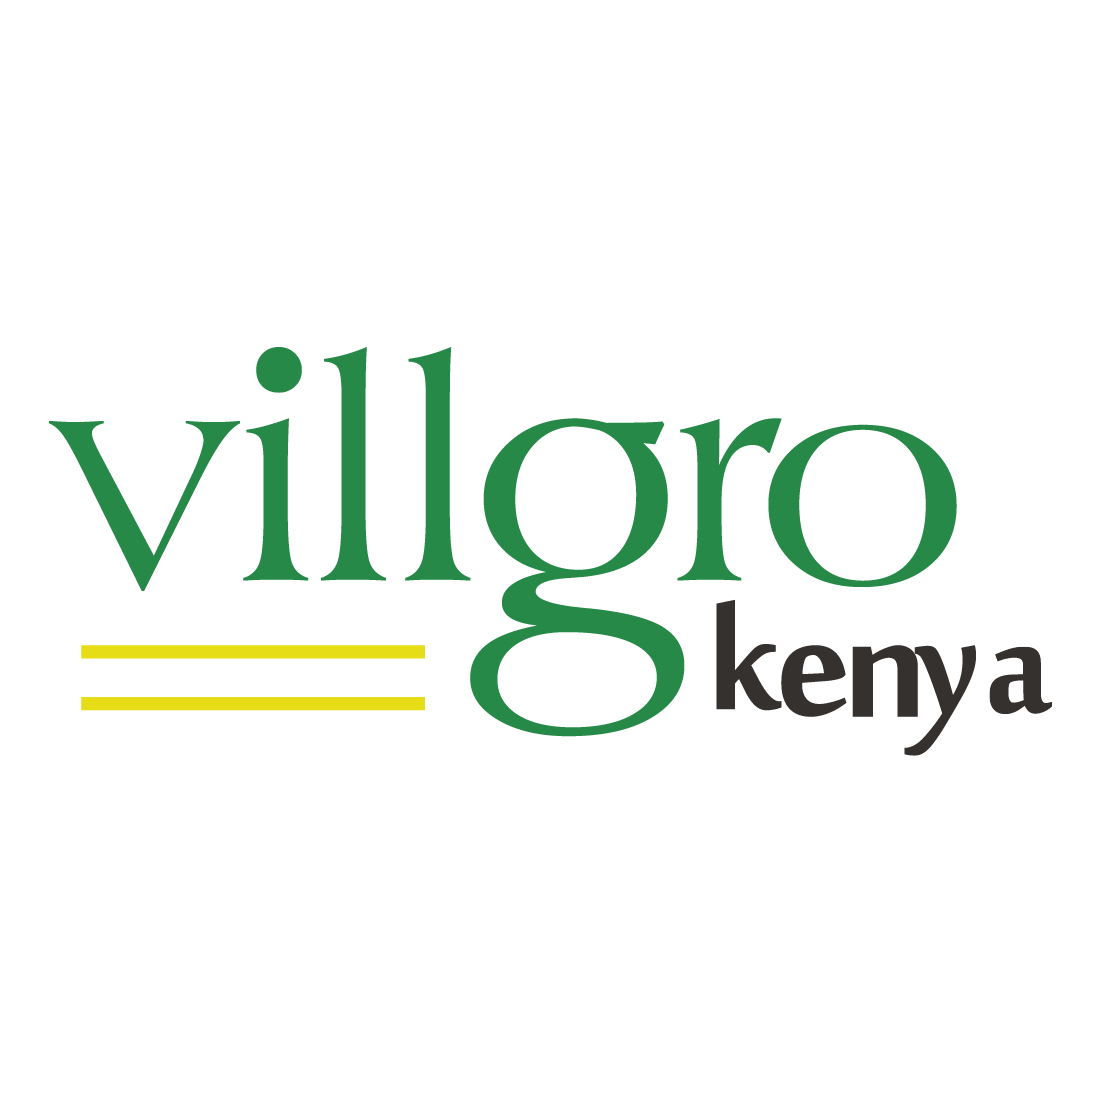 Villgro Kenya Awards 12 East African startups $150,000 in grants to ...